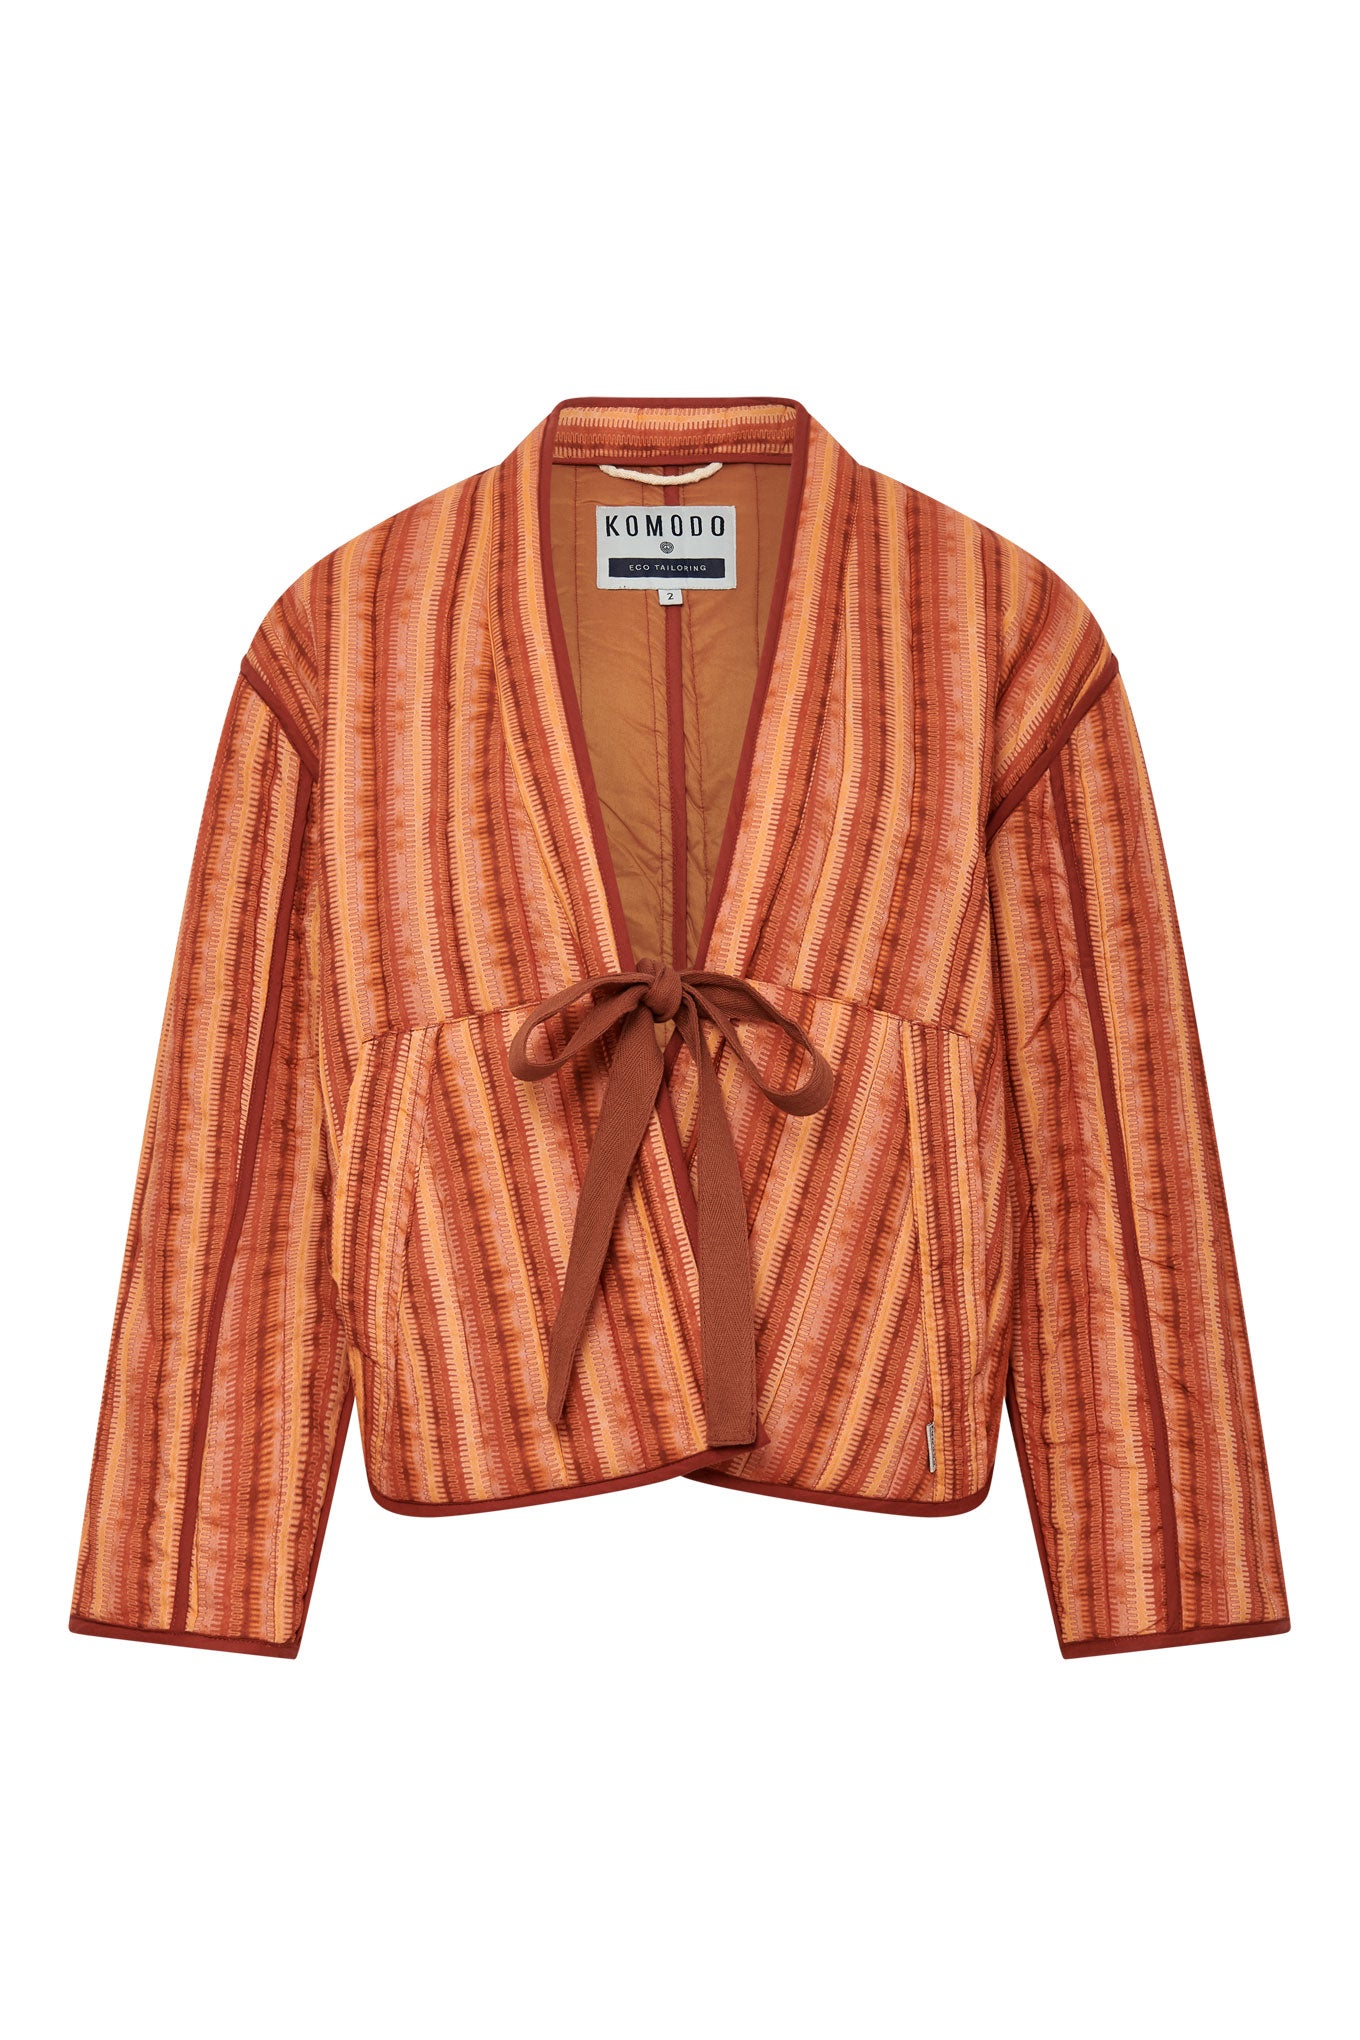 WEAVE - Organic Cotton Jacket Pink Weave Stripe